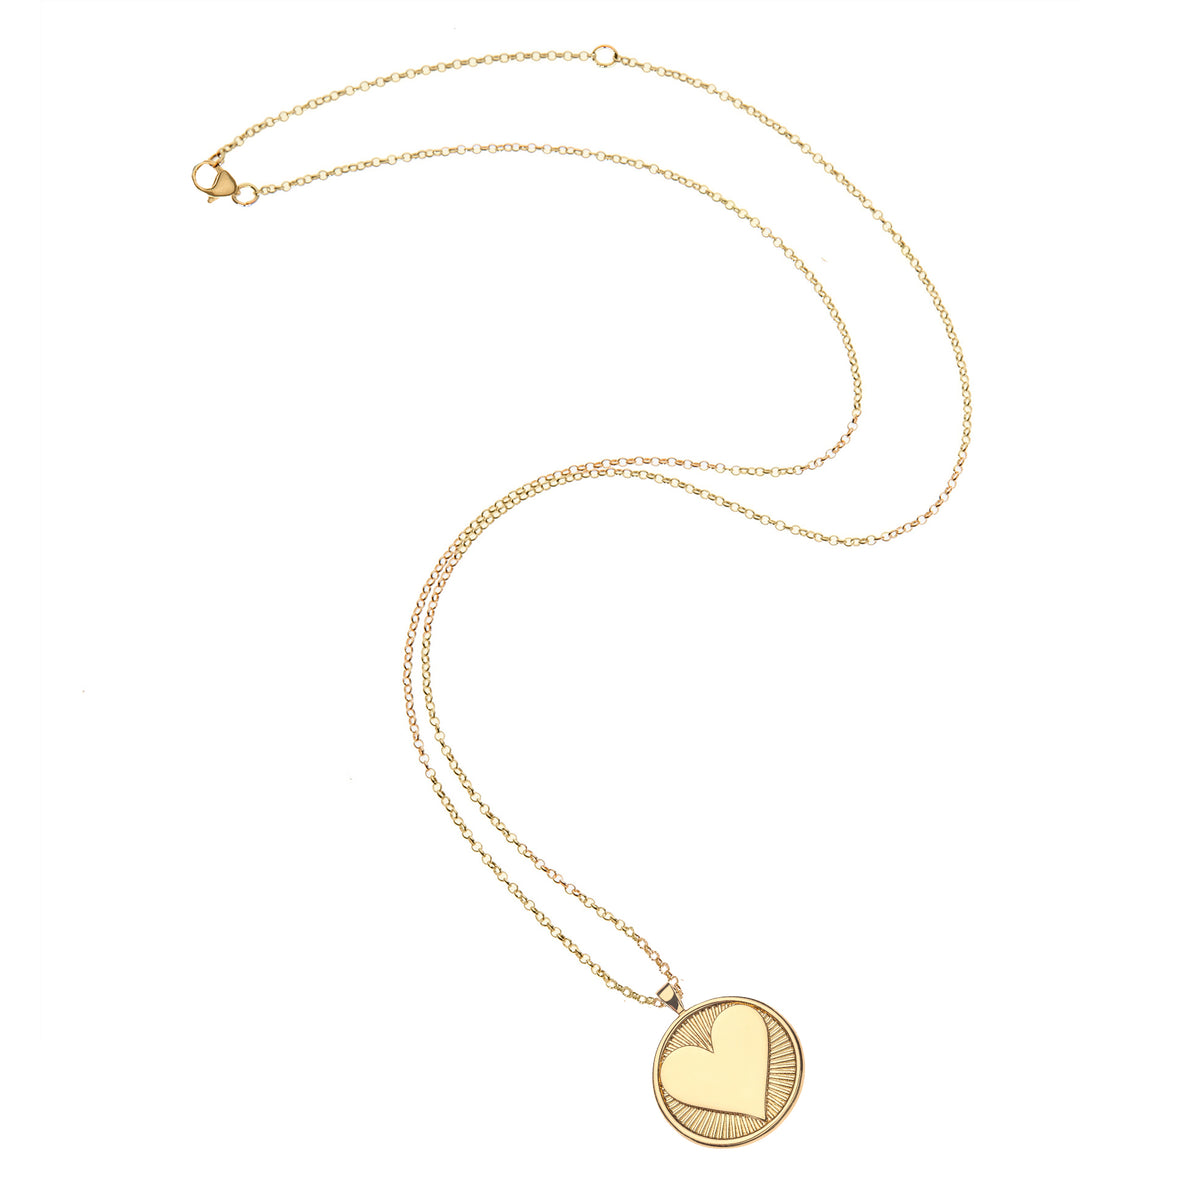 Hearts Find Me Love Pendant Necklace